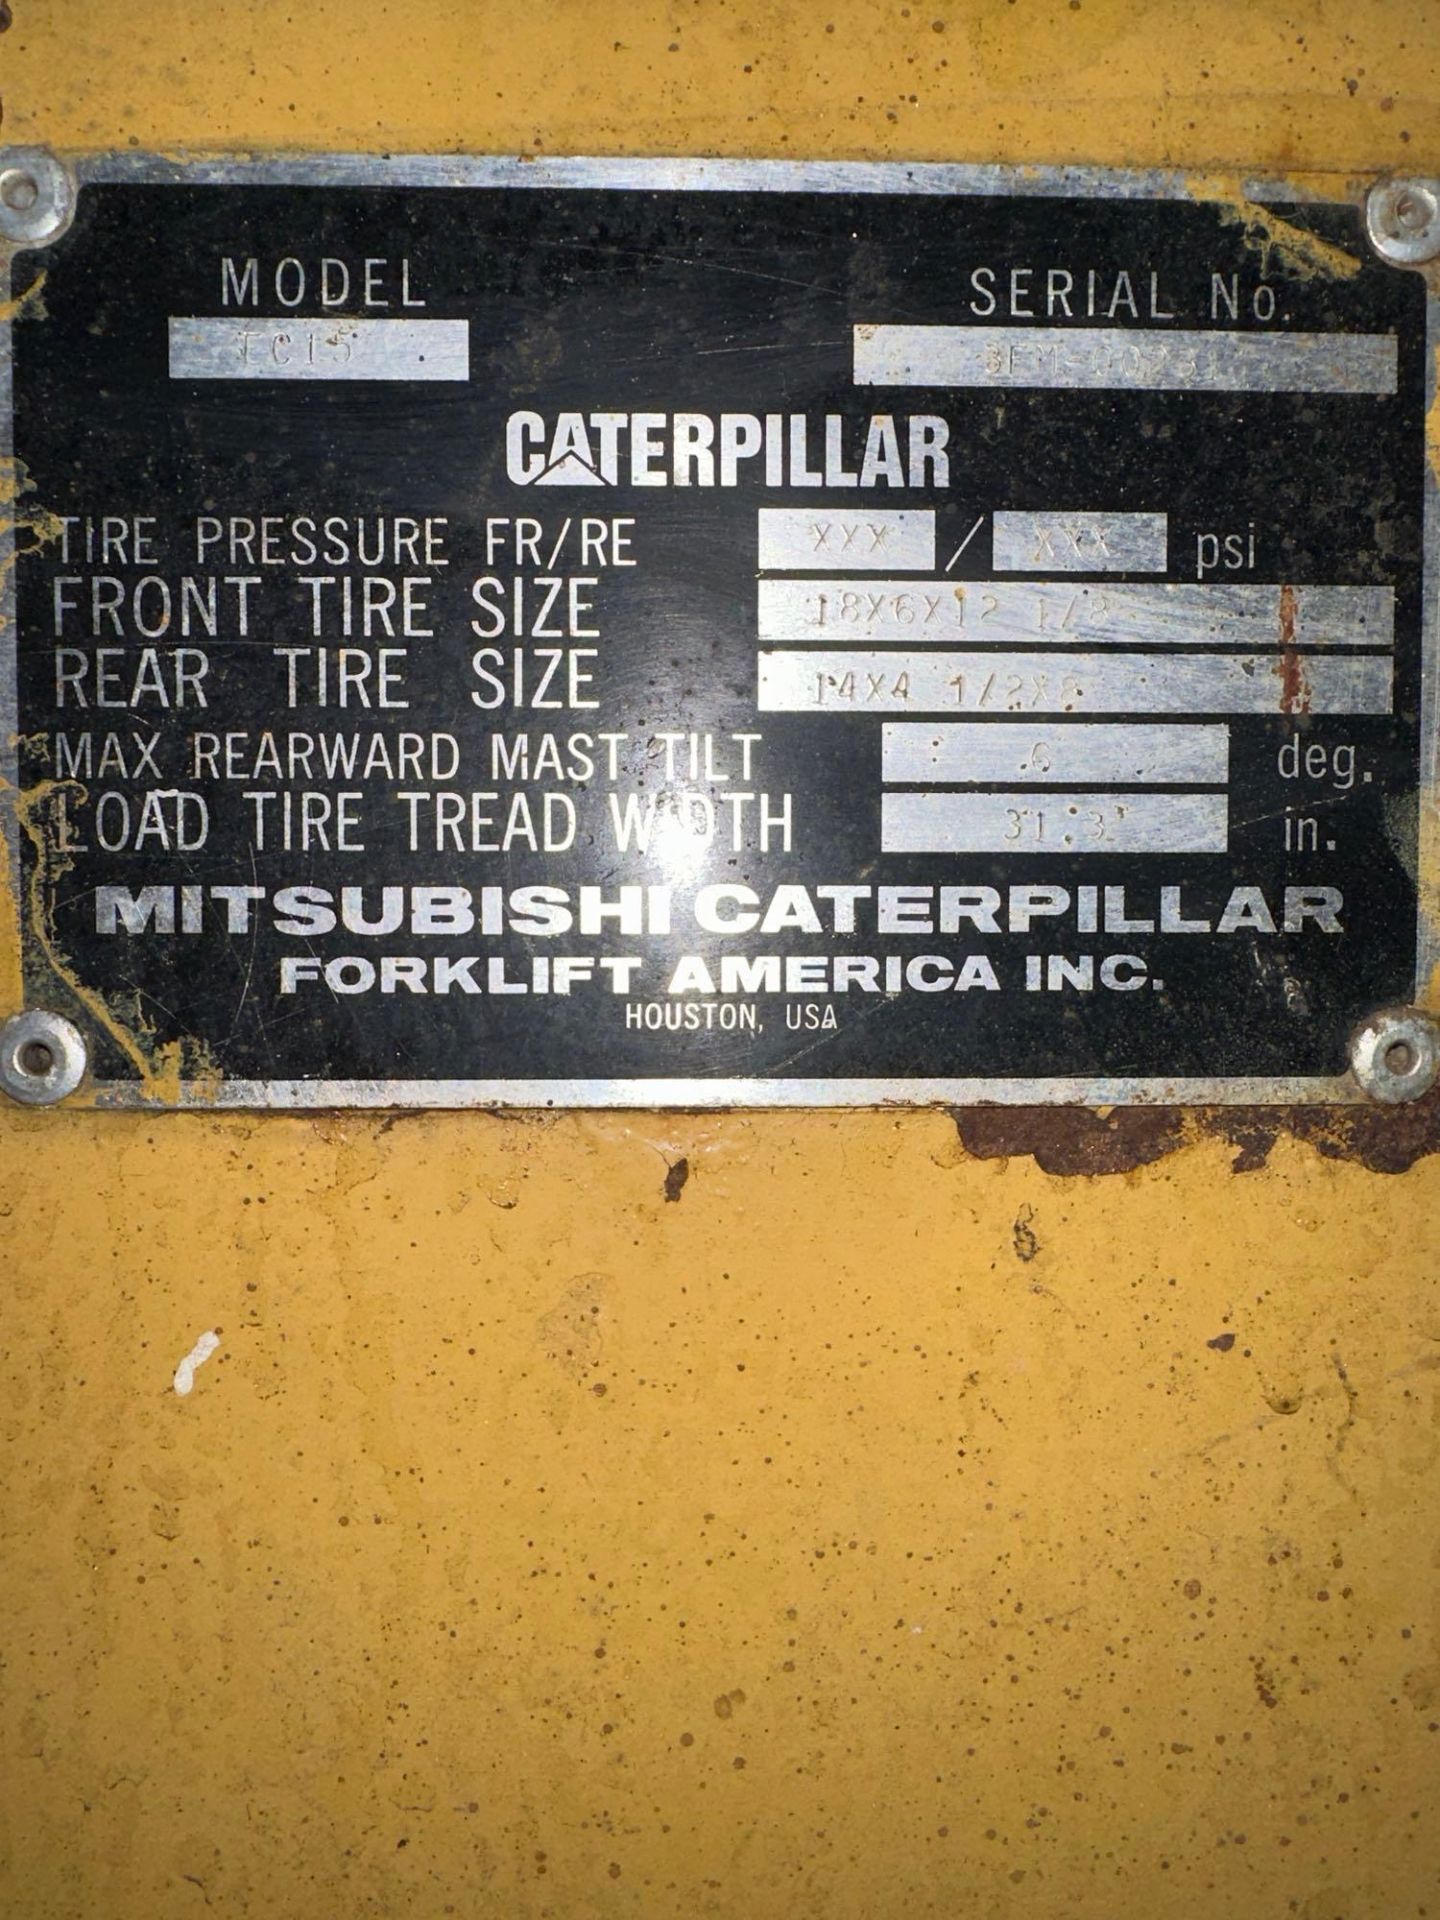 Caterpillar Forklift model EC15 - Image 12 of 12